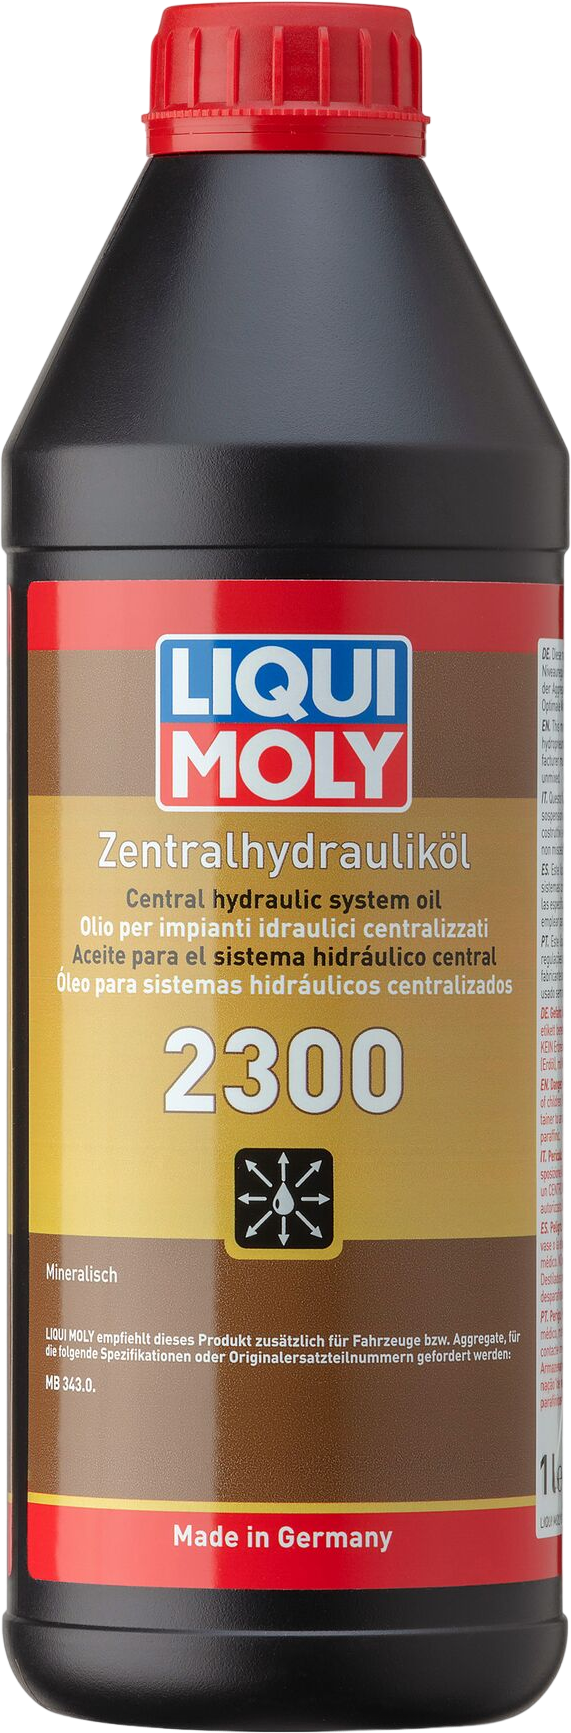 Liqui Moly Centrale hydrauliekolie 2300, 1 lt